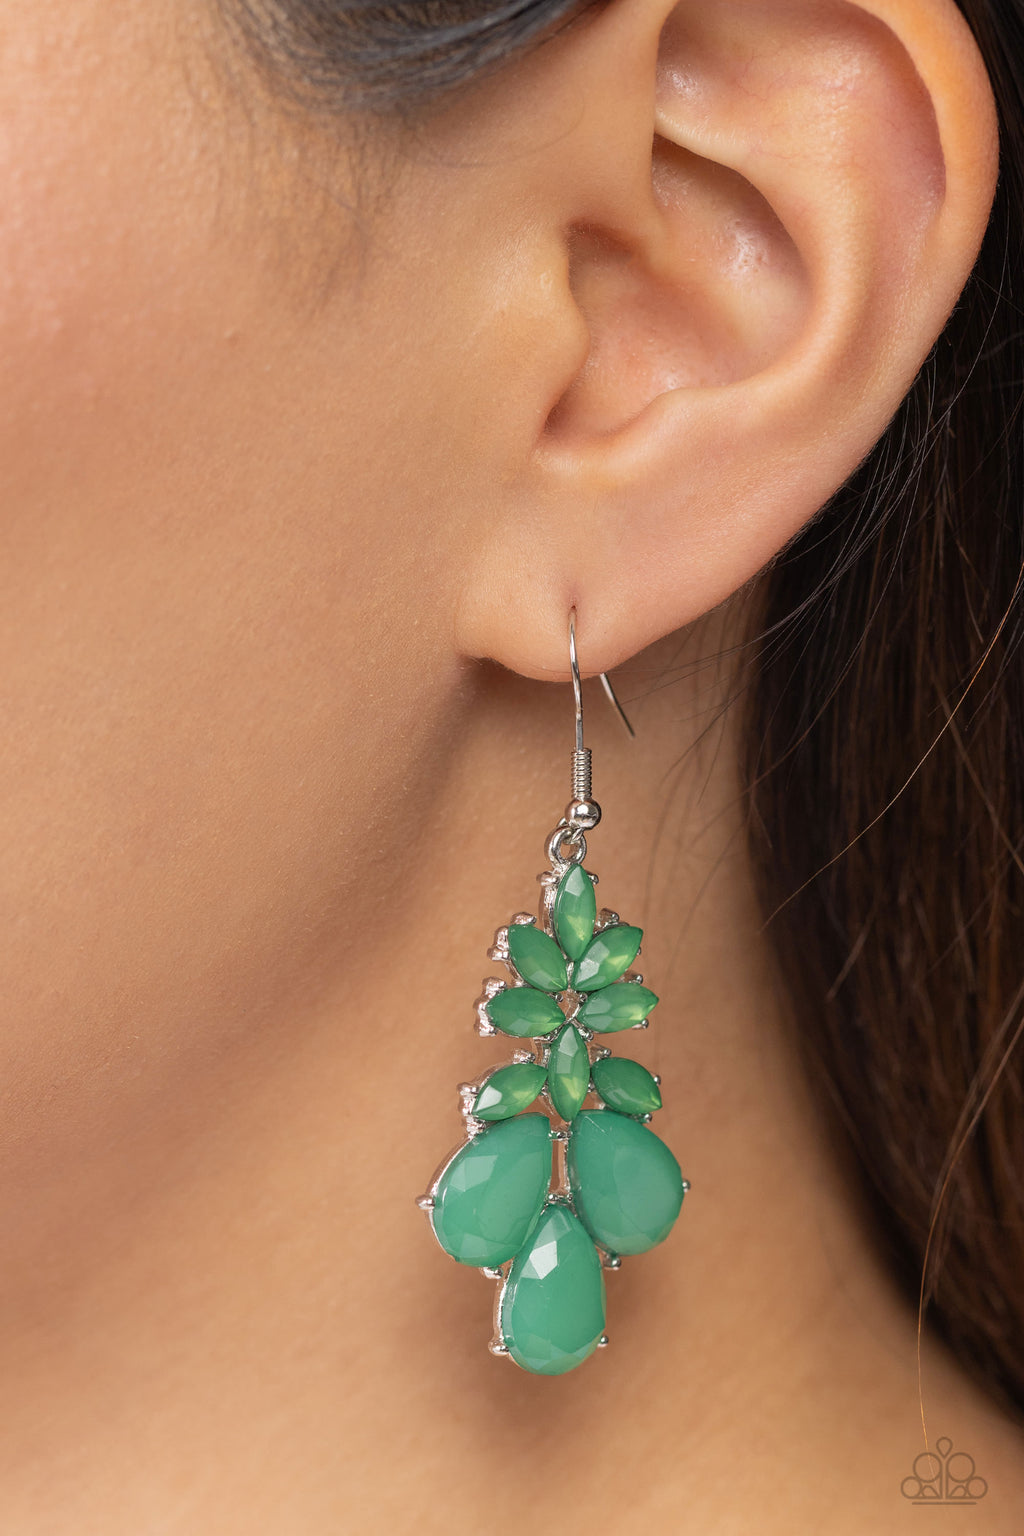 Fashionista Fiesta - Green Earrings - Paparazzi Accessories